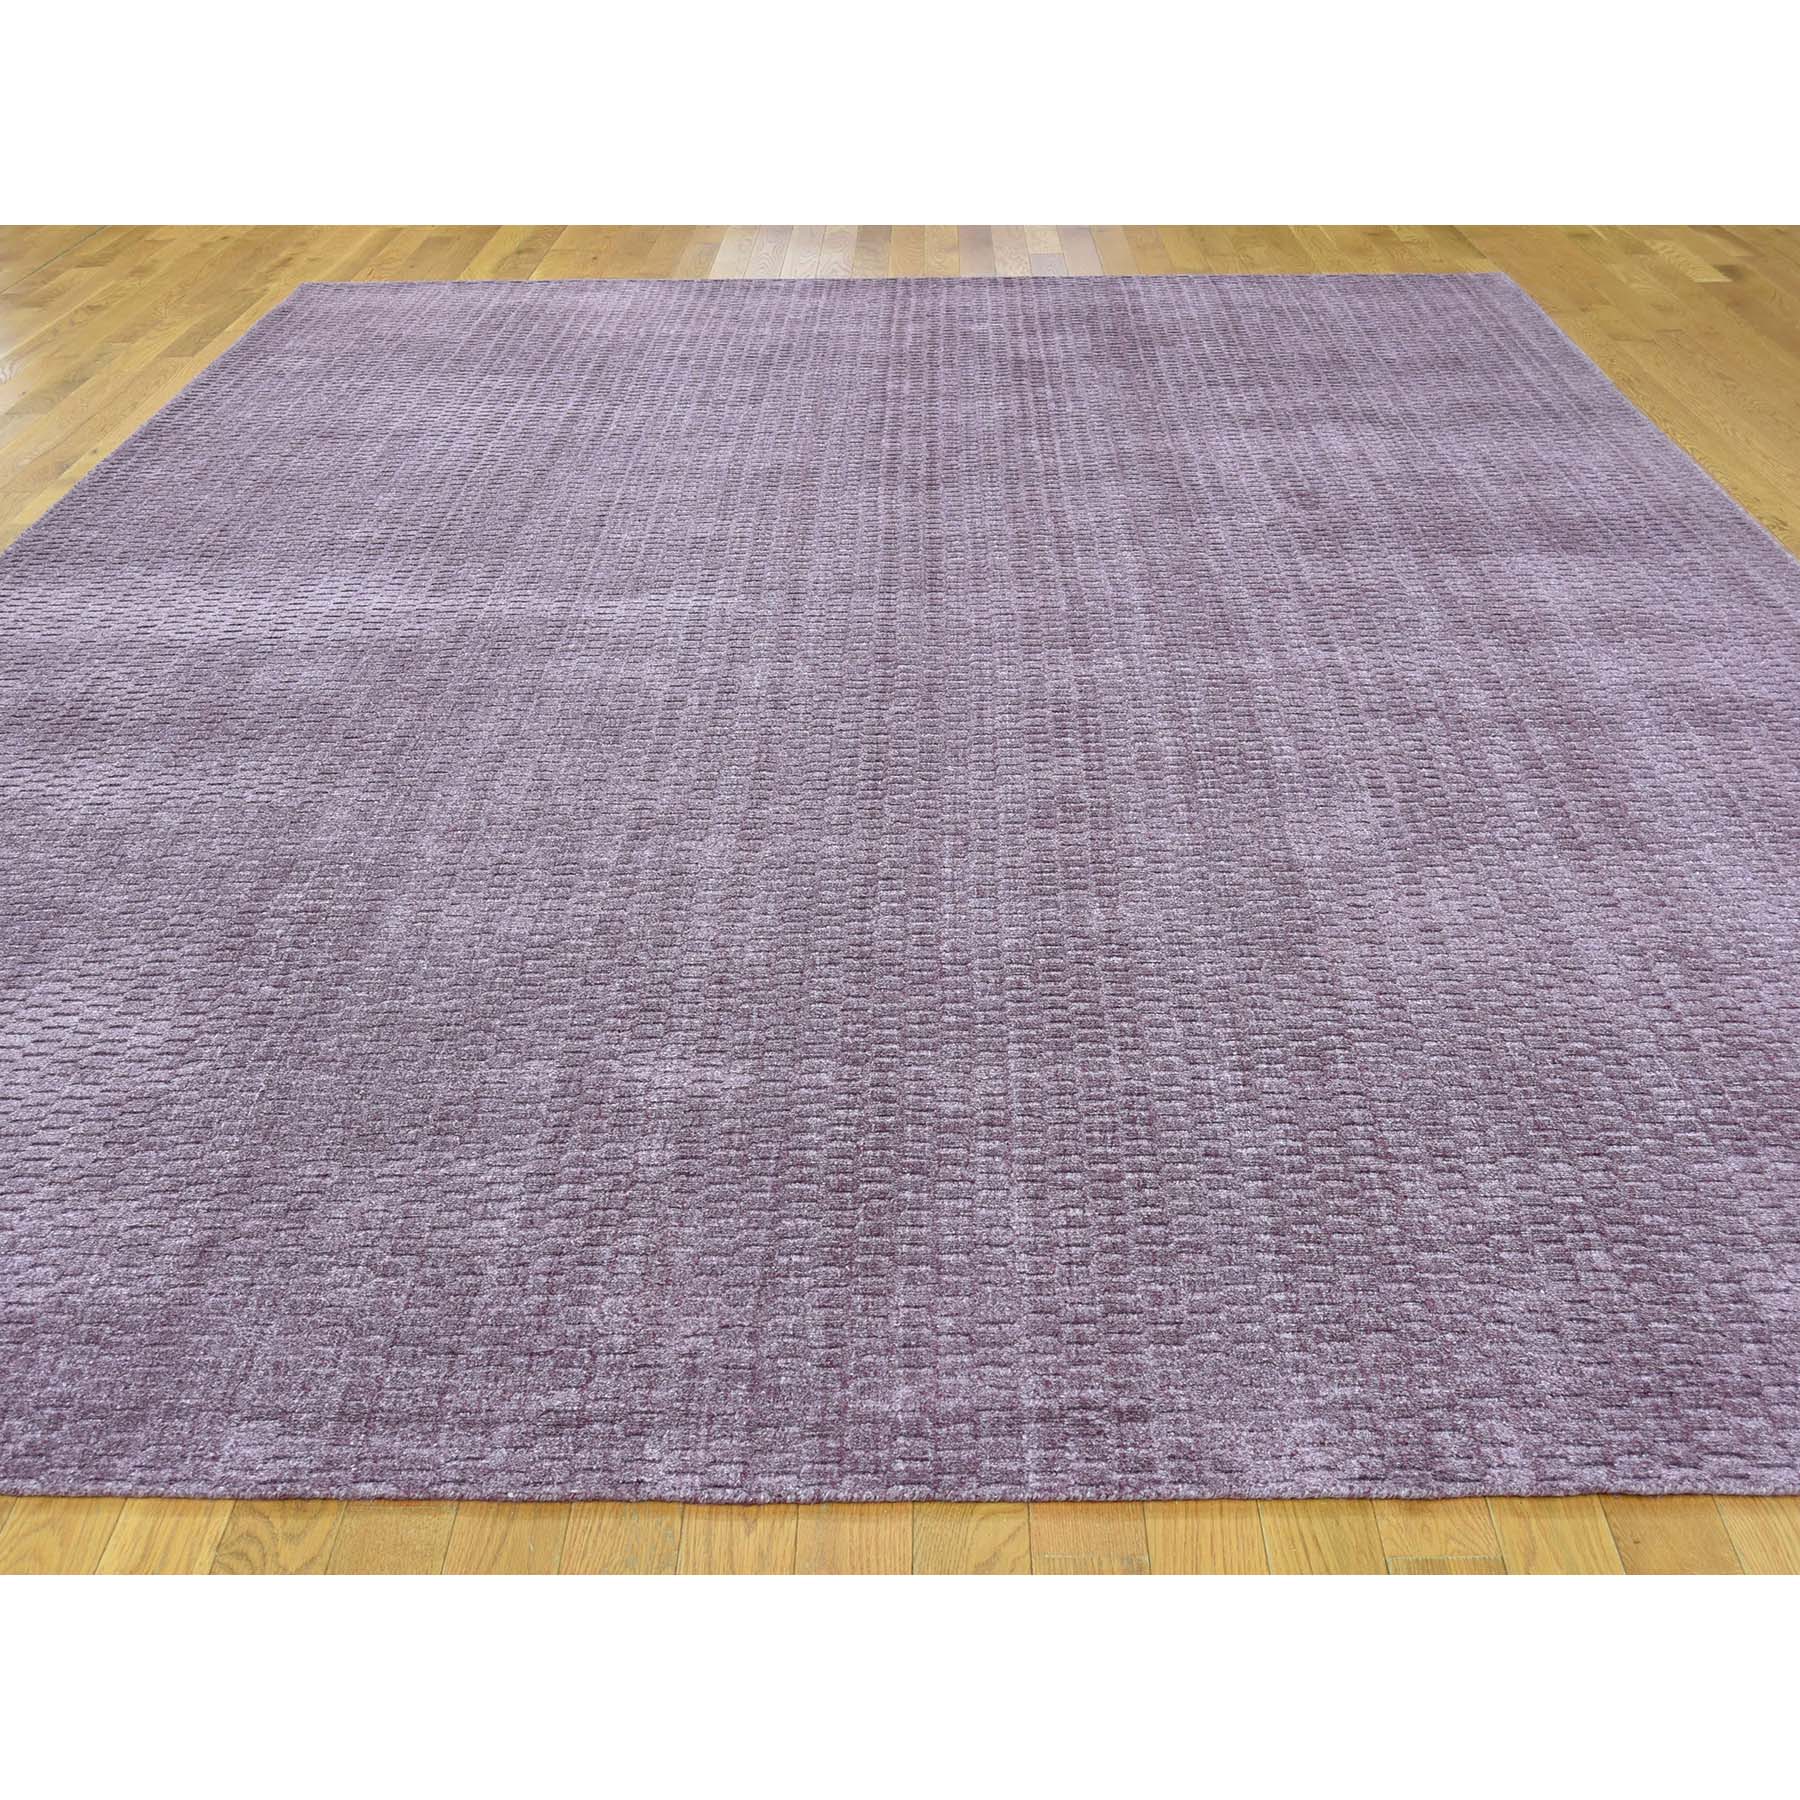 9-1 x12- Hand-Loomed Tone on Tone Pure Wool Oriental Rug 